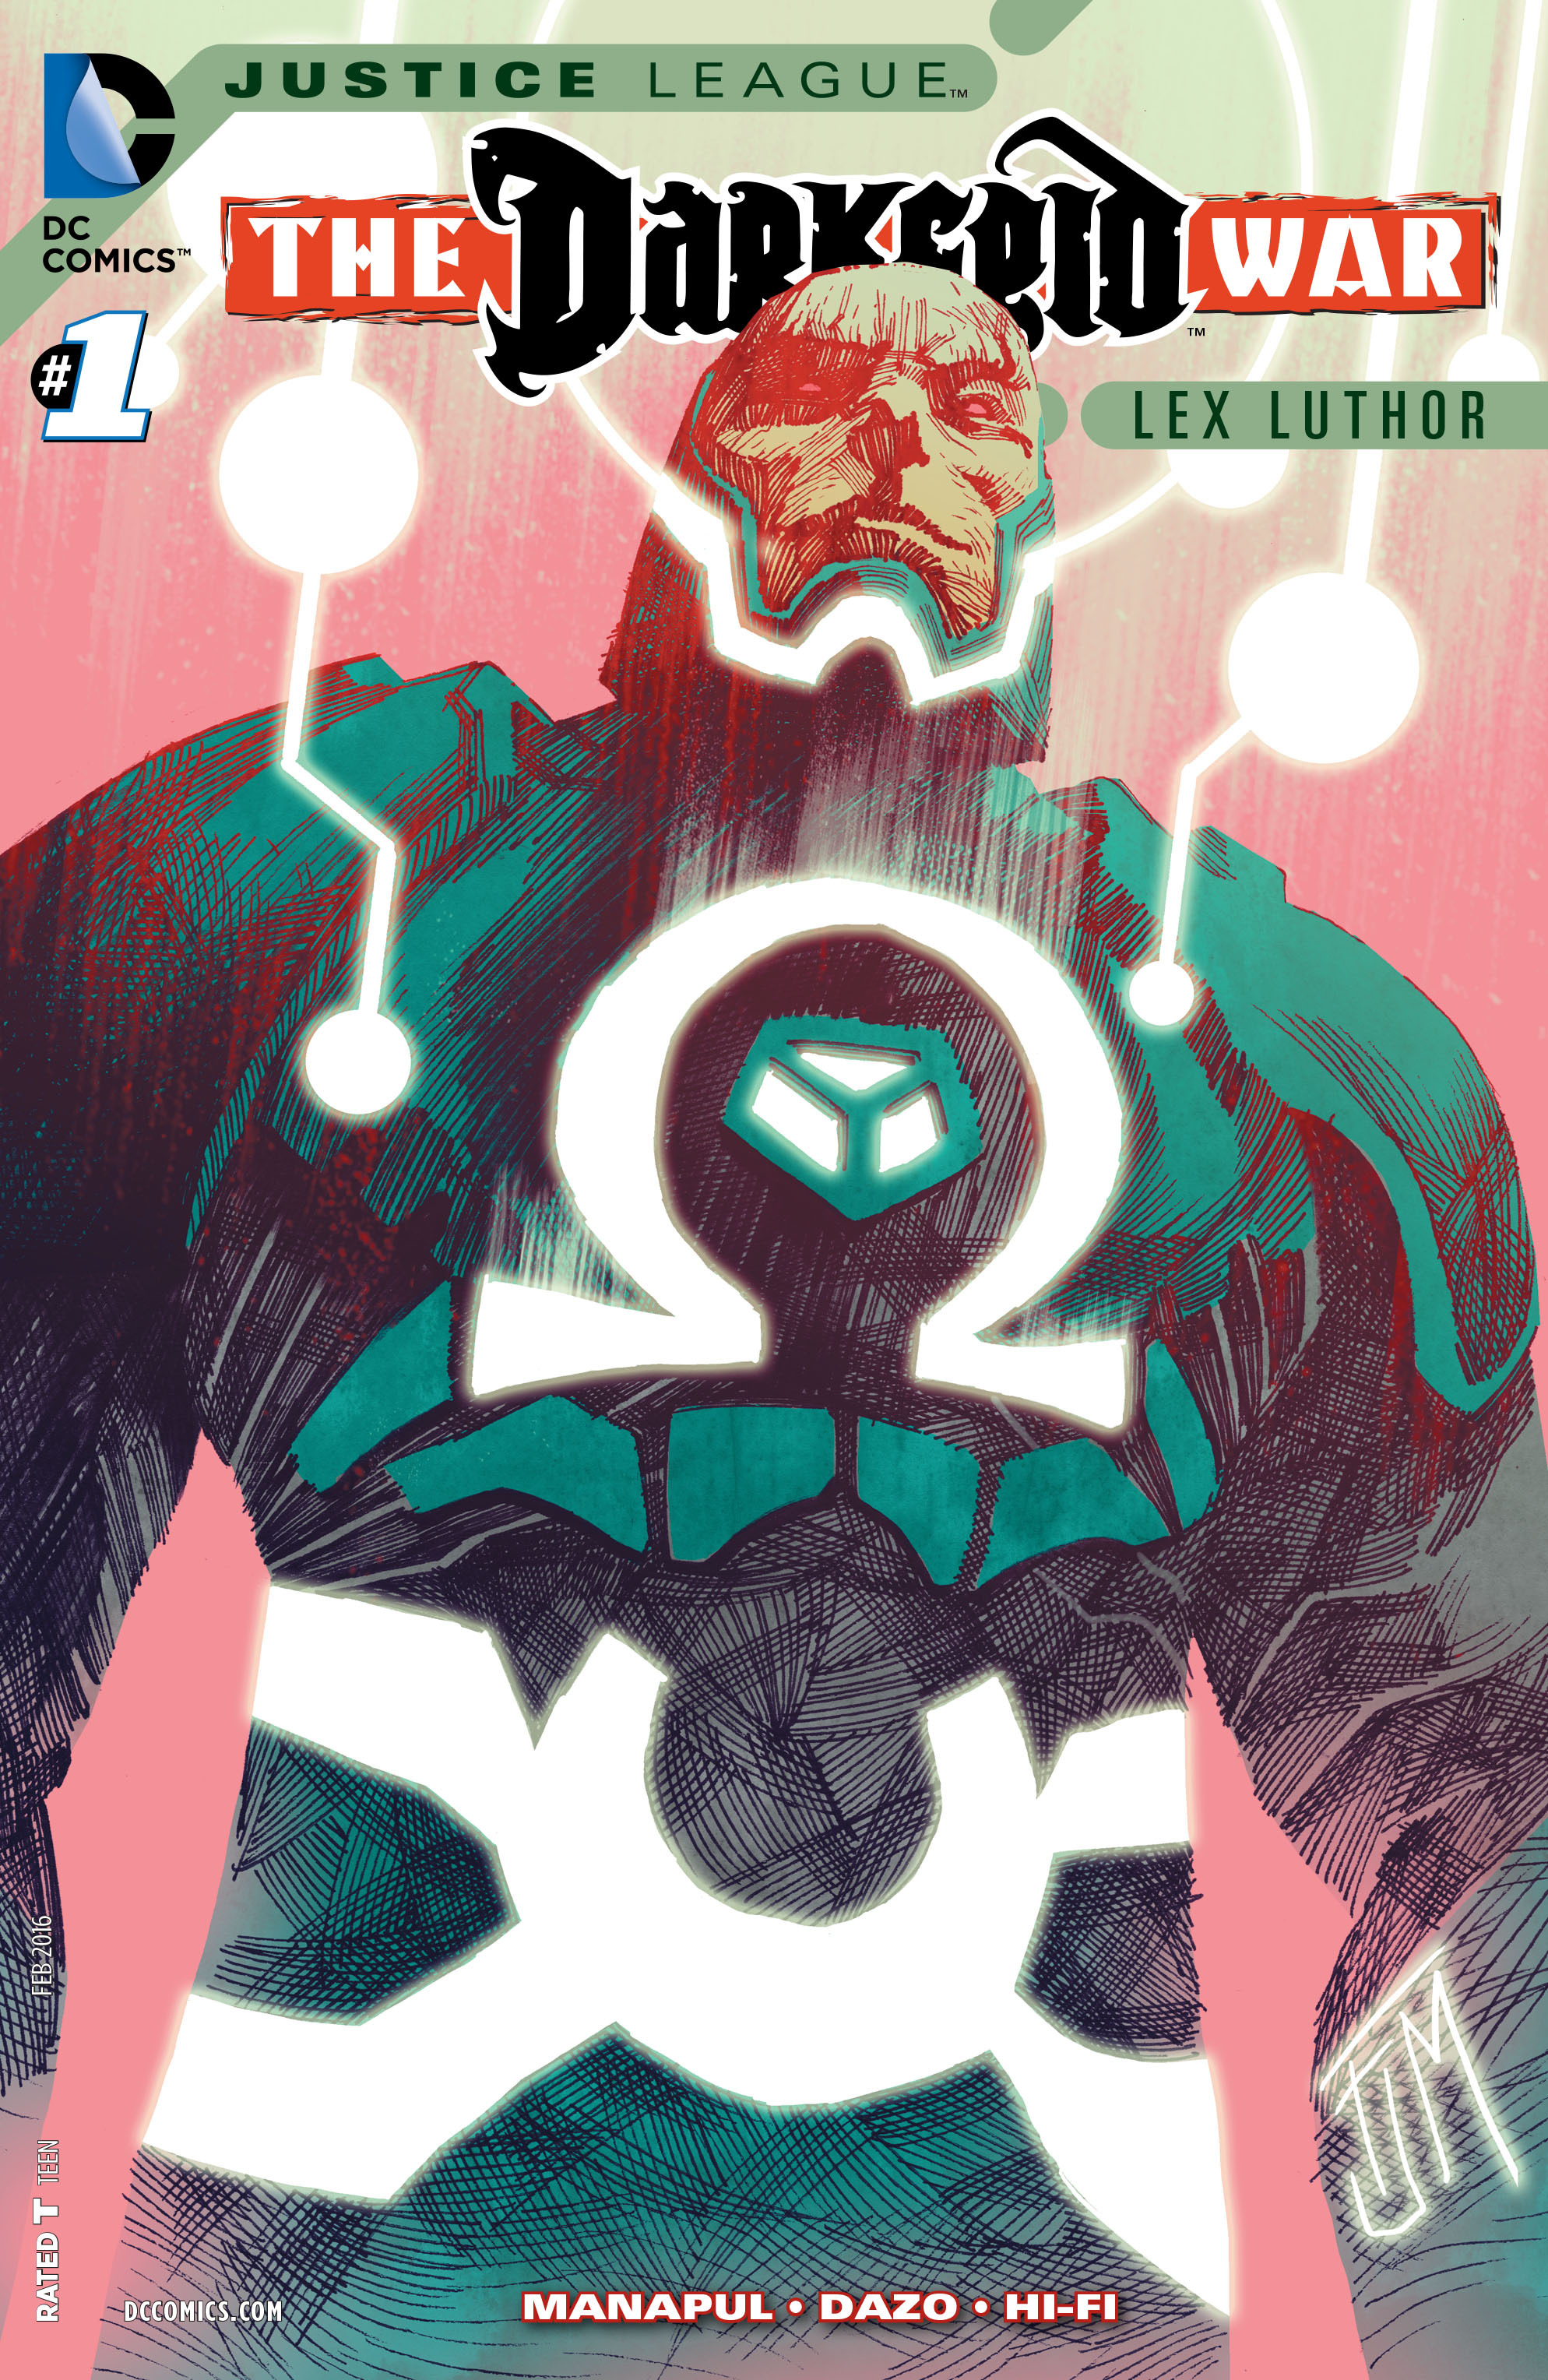 Read online Justice League: Darkseid War: Lex Luthor comic -  Issue # Full - 1